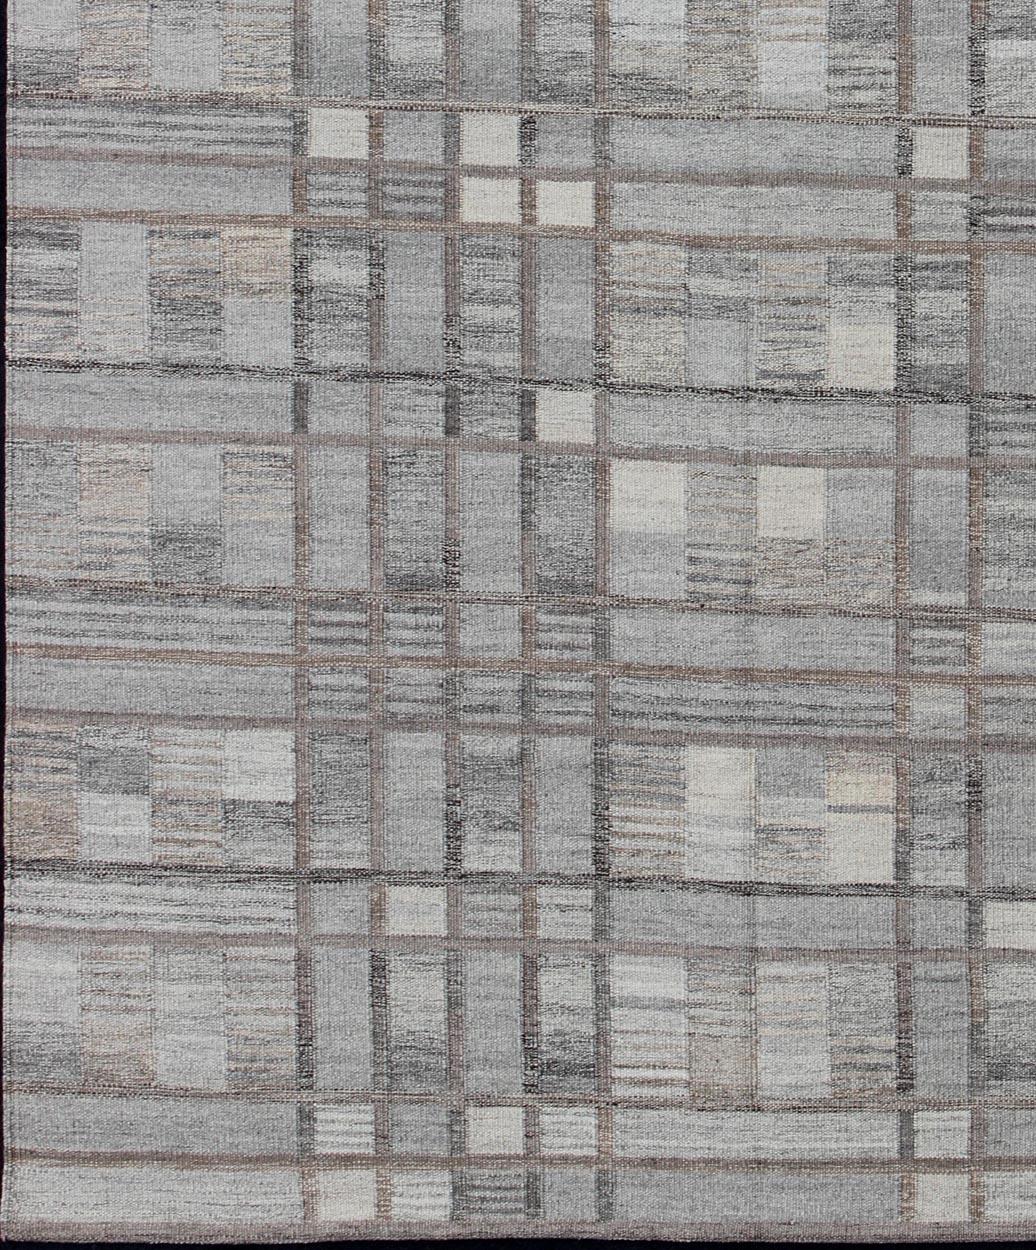 Gray colored geometric stripe block modern Scandinavian flat-weave design rug, rug rjk-16330-shb-047-03, country of origin / type: India / Scandinavian flat-weave.

This Scandinavian flat-weave is inspired by the work of Swedish textile designers